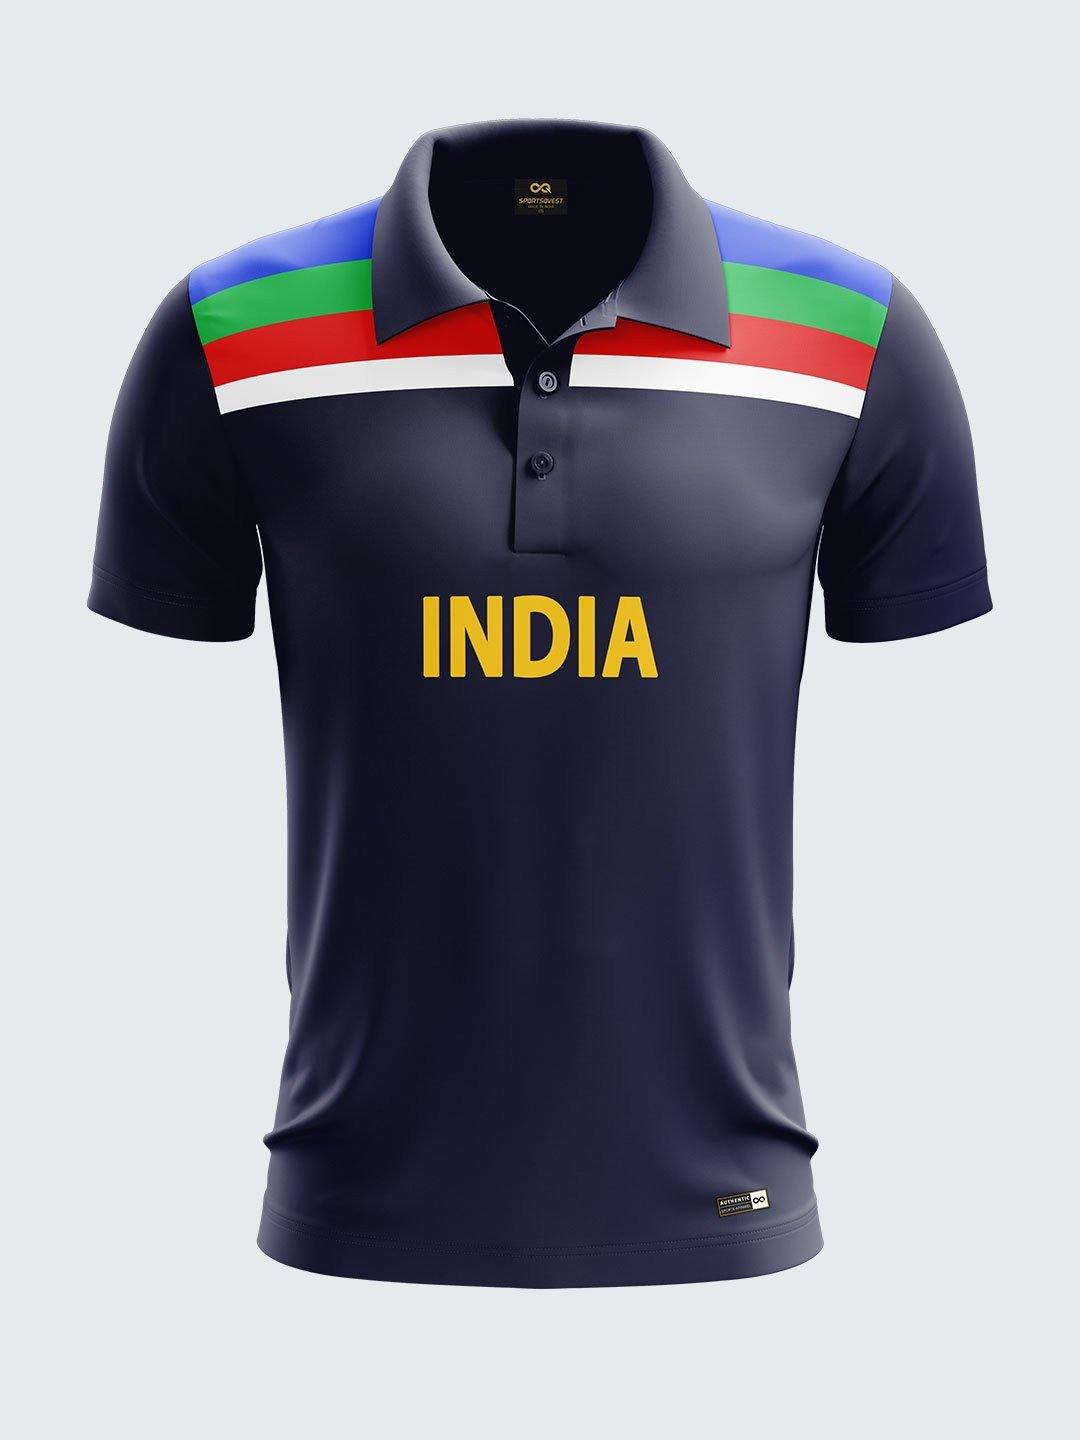 1992 indian cricket team jersey